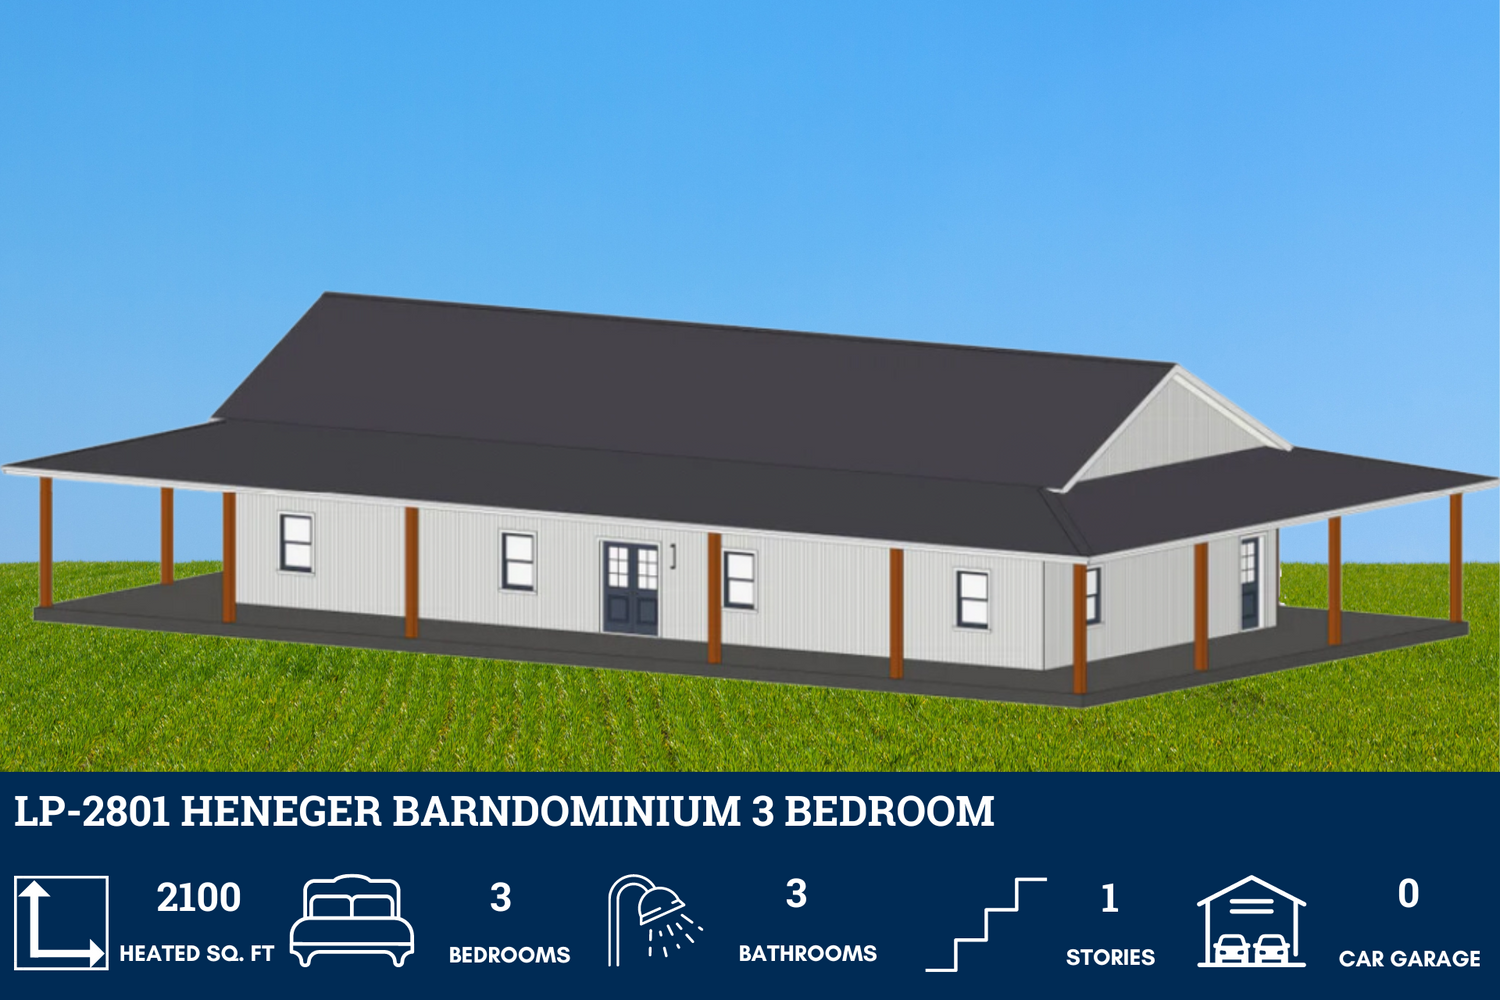 3 Bedroom Barndominium House Plans